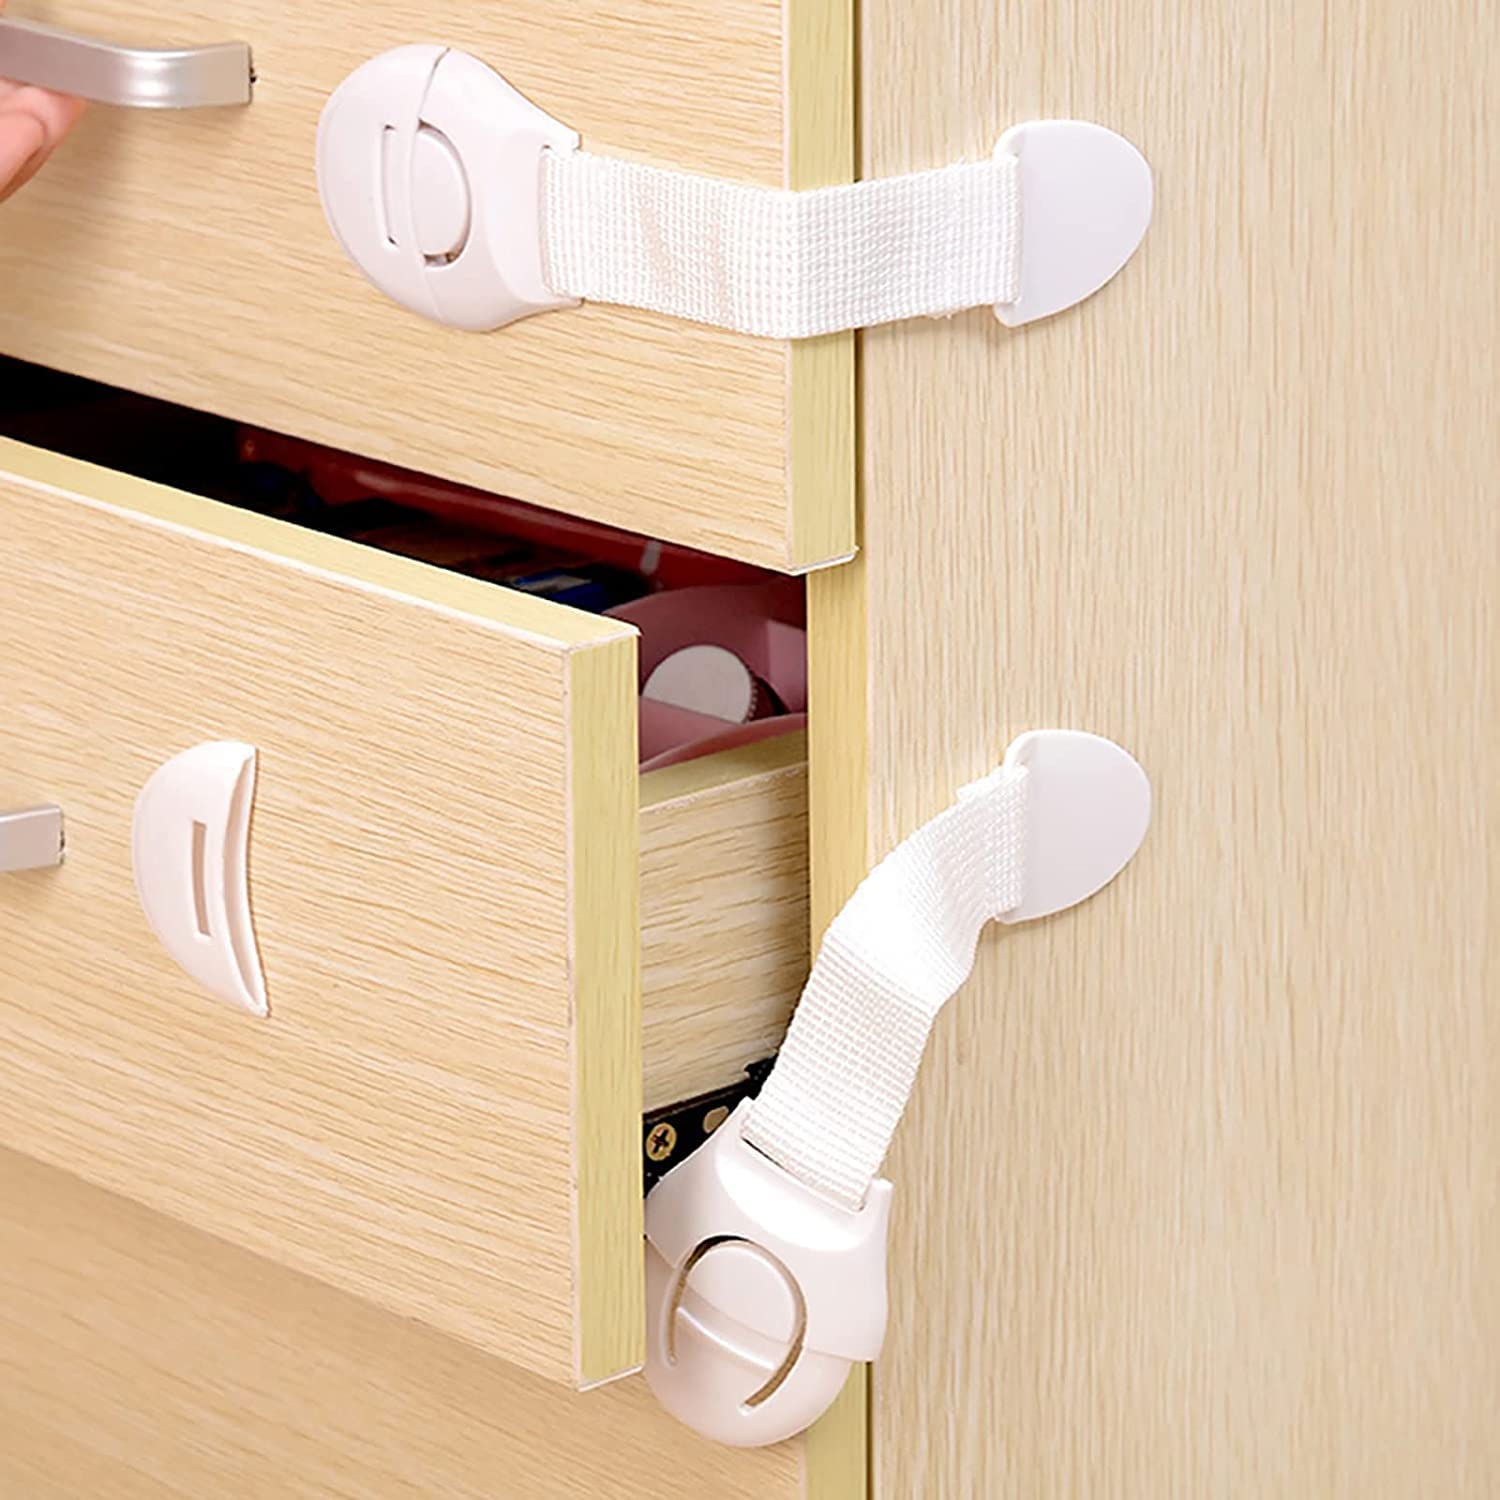 Top Shop Baby Safety Cabinet Locks Drawer Door Locks for Baby